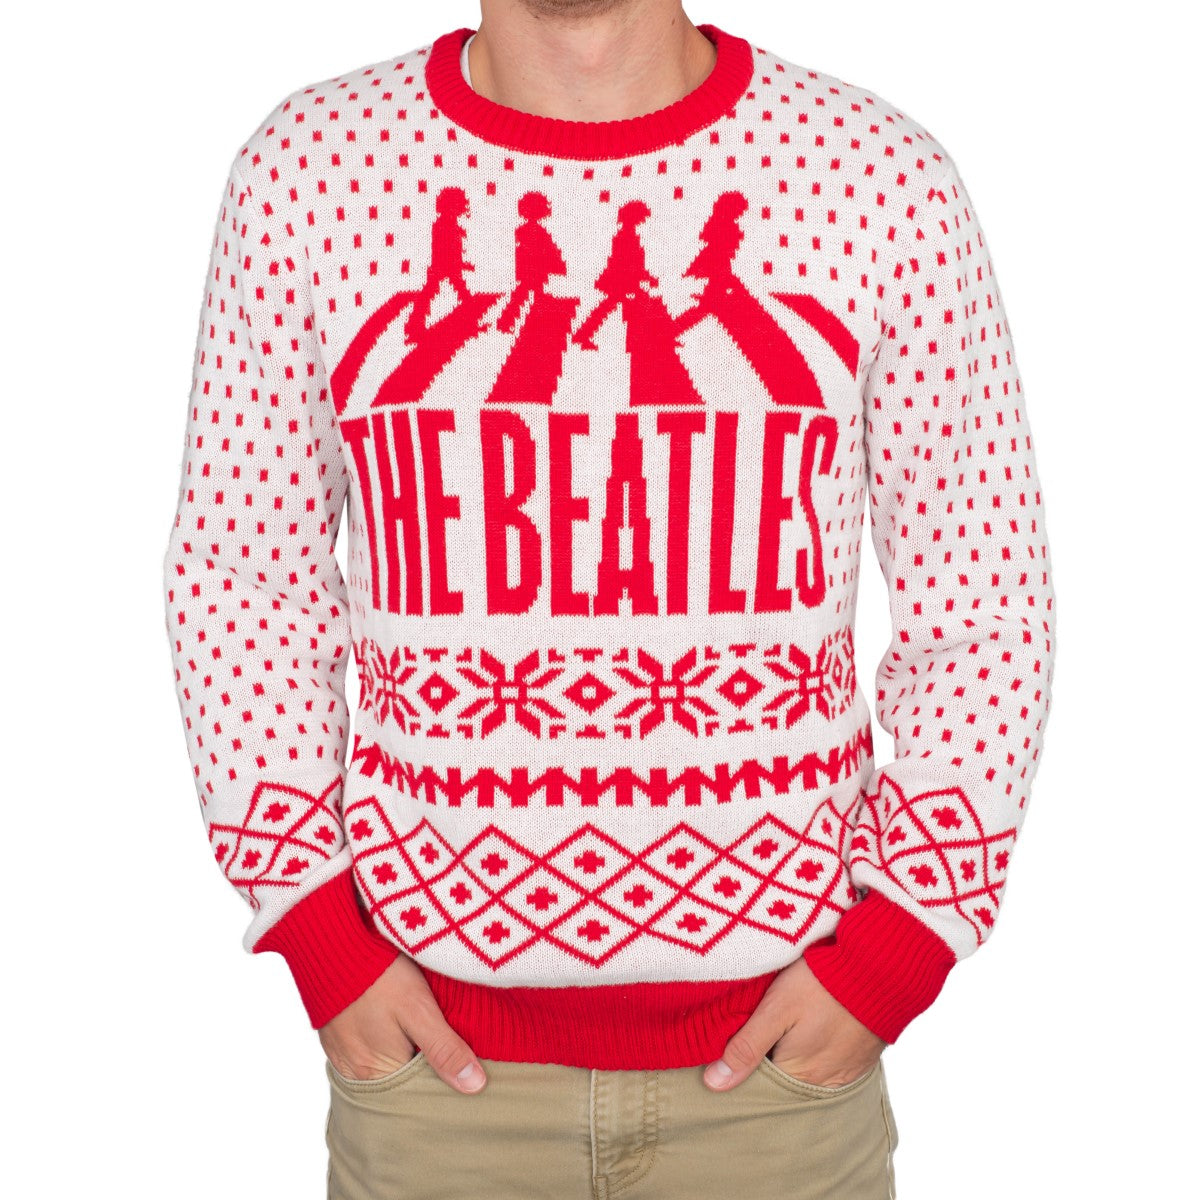 Rock Band Ugly Christmas Sweaters